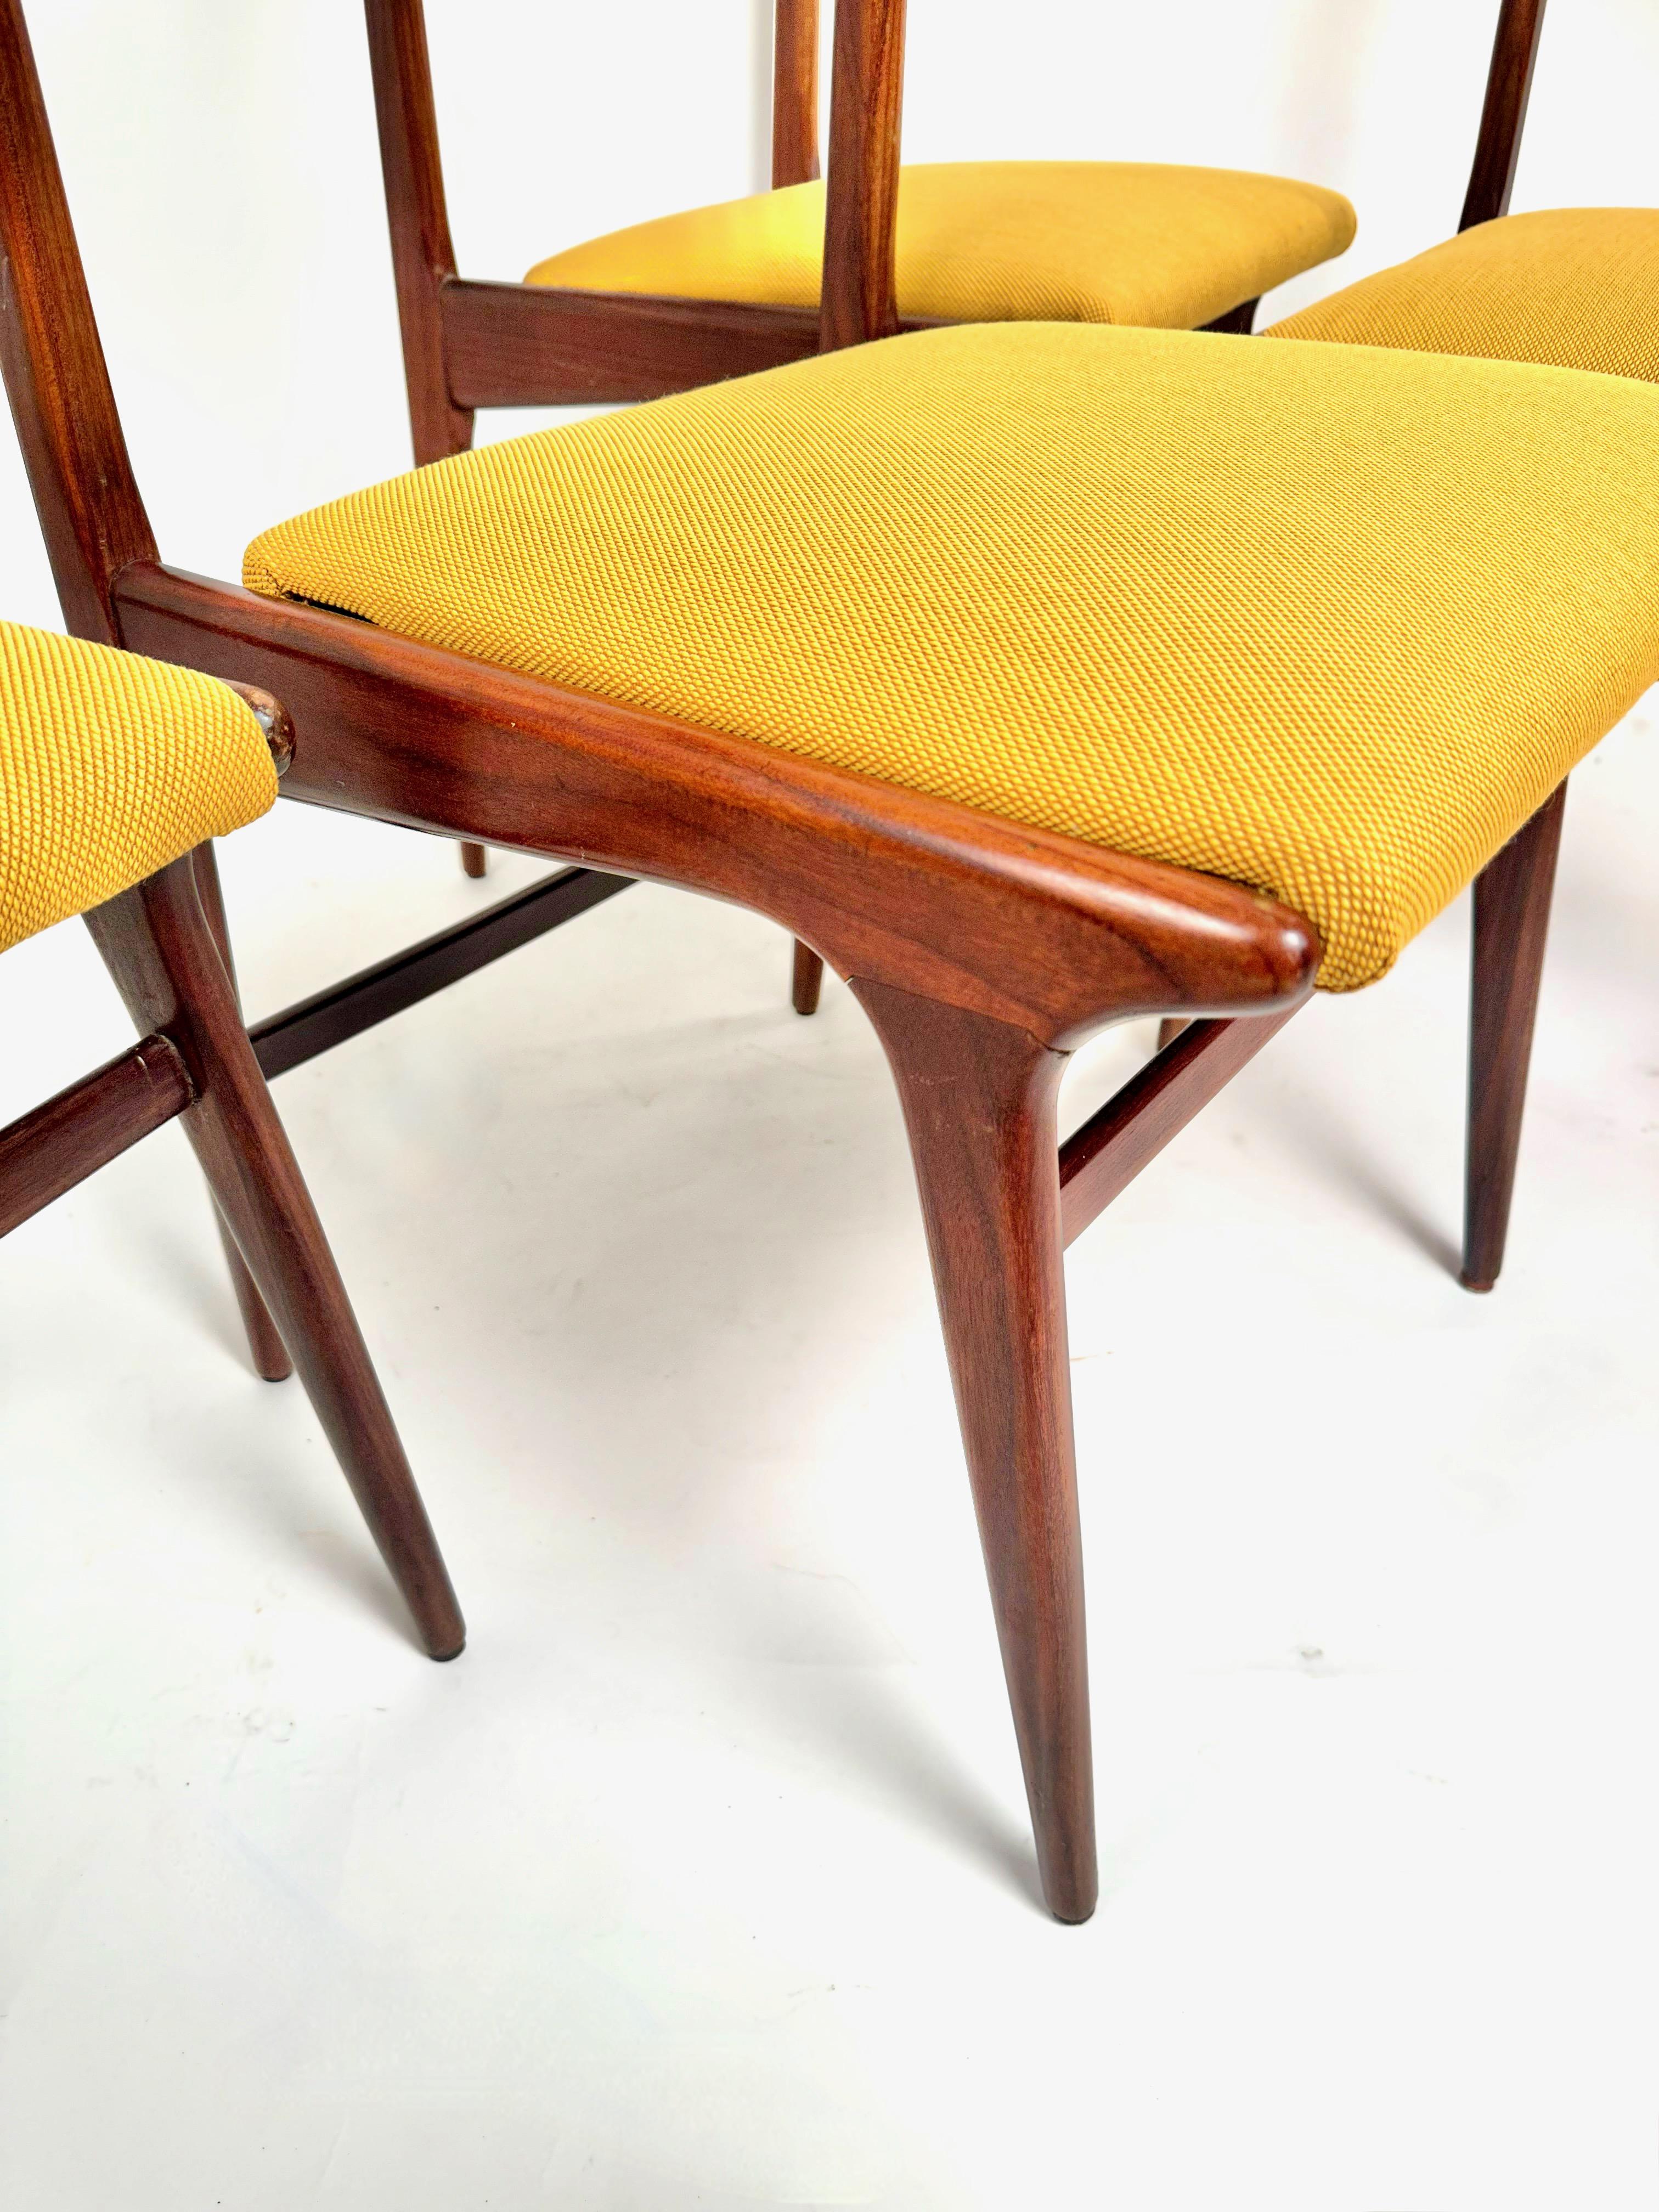 Carlo de Carli MidSet of Four Teak Dining Chairs in Kvadrat Yello Fabric, 1960s For Sale 4